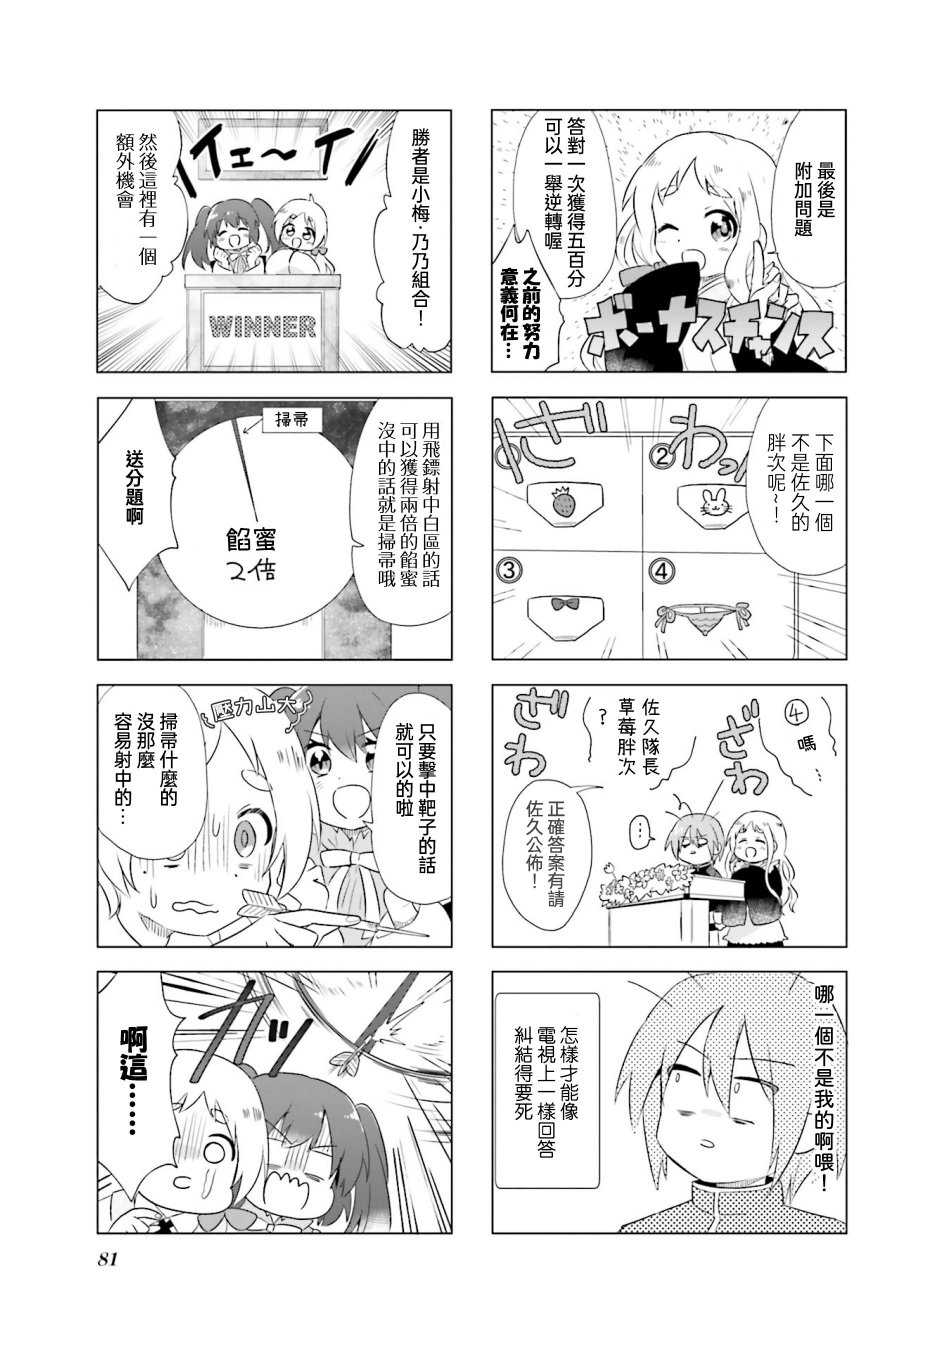 Urara迷路帖 漫畫選集 - 第9話 - 1